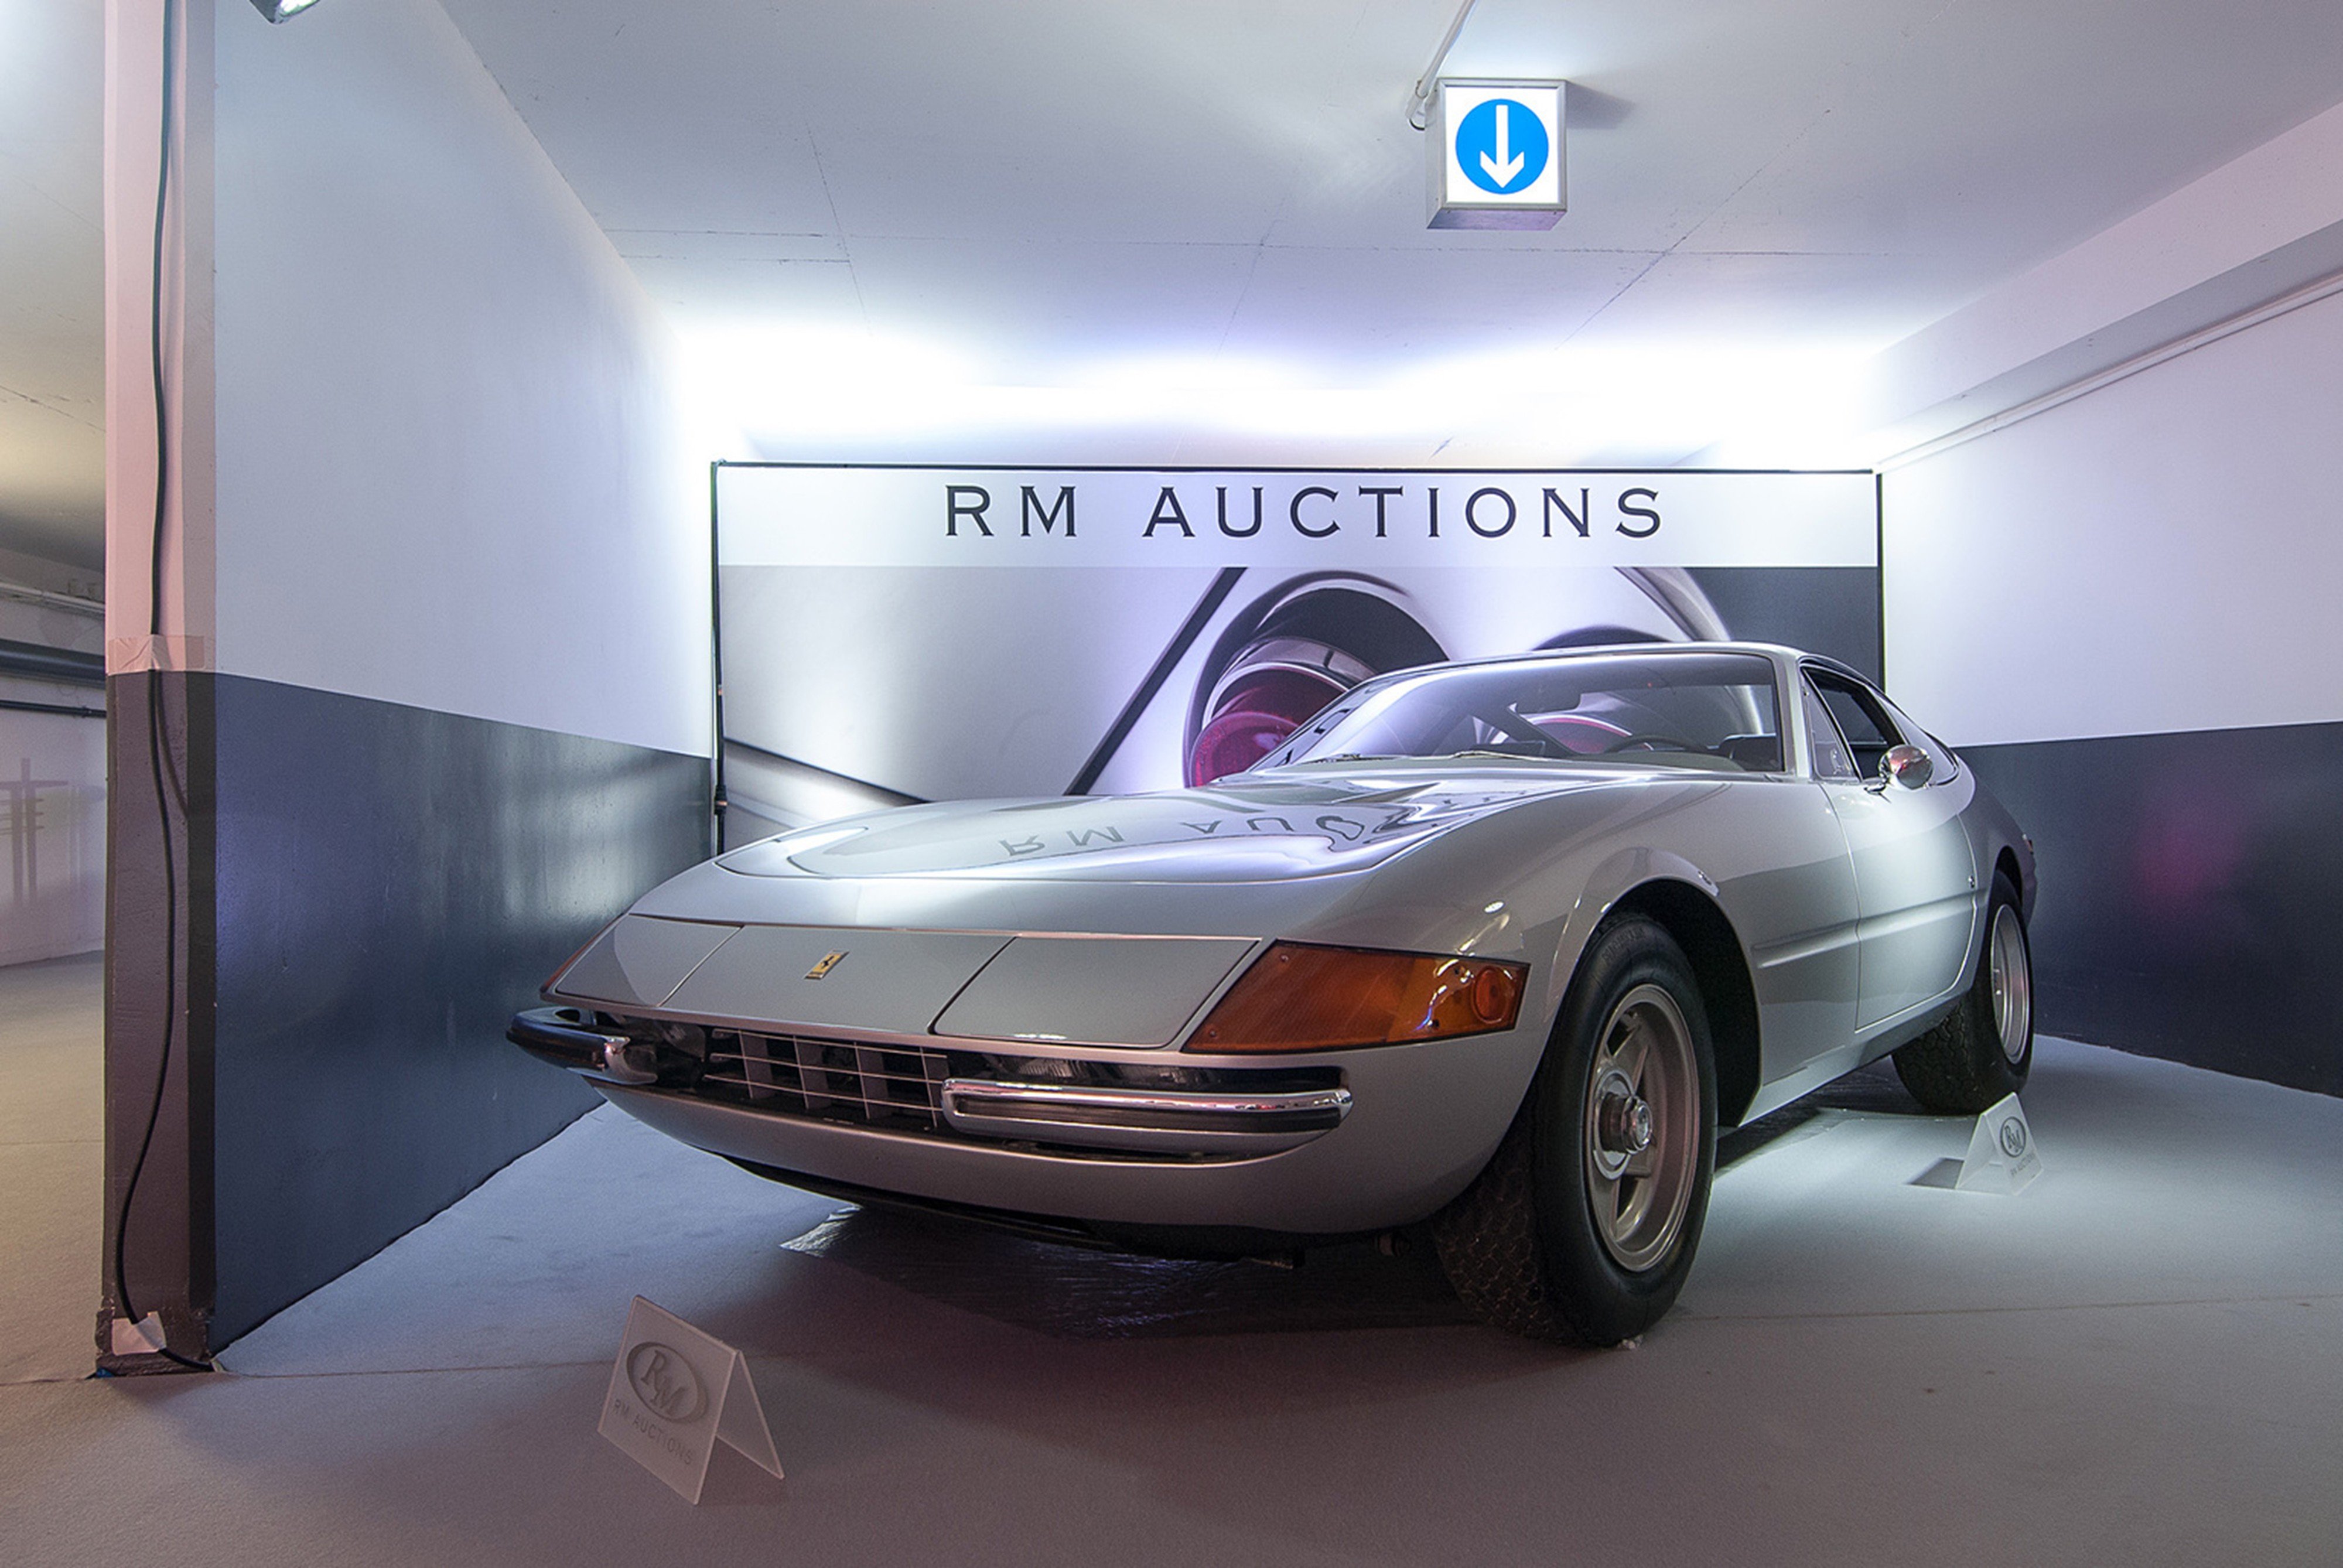 rmand039s, Auction, In, Monaco, Classic, Car, 1973, Ferrari, 365, Gtb4, Daytona, 4000x2677 Wallpaper